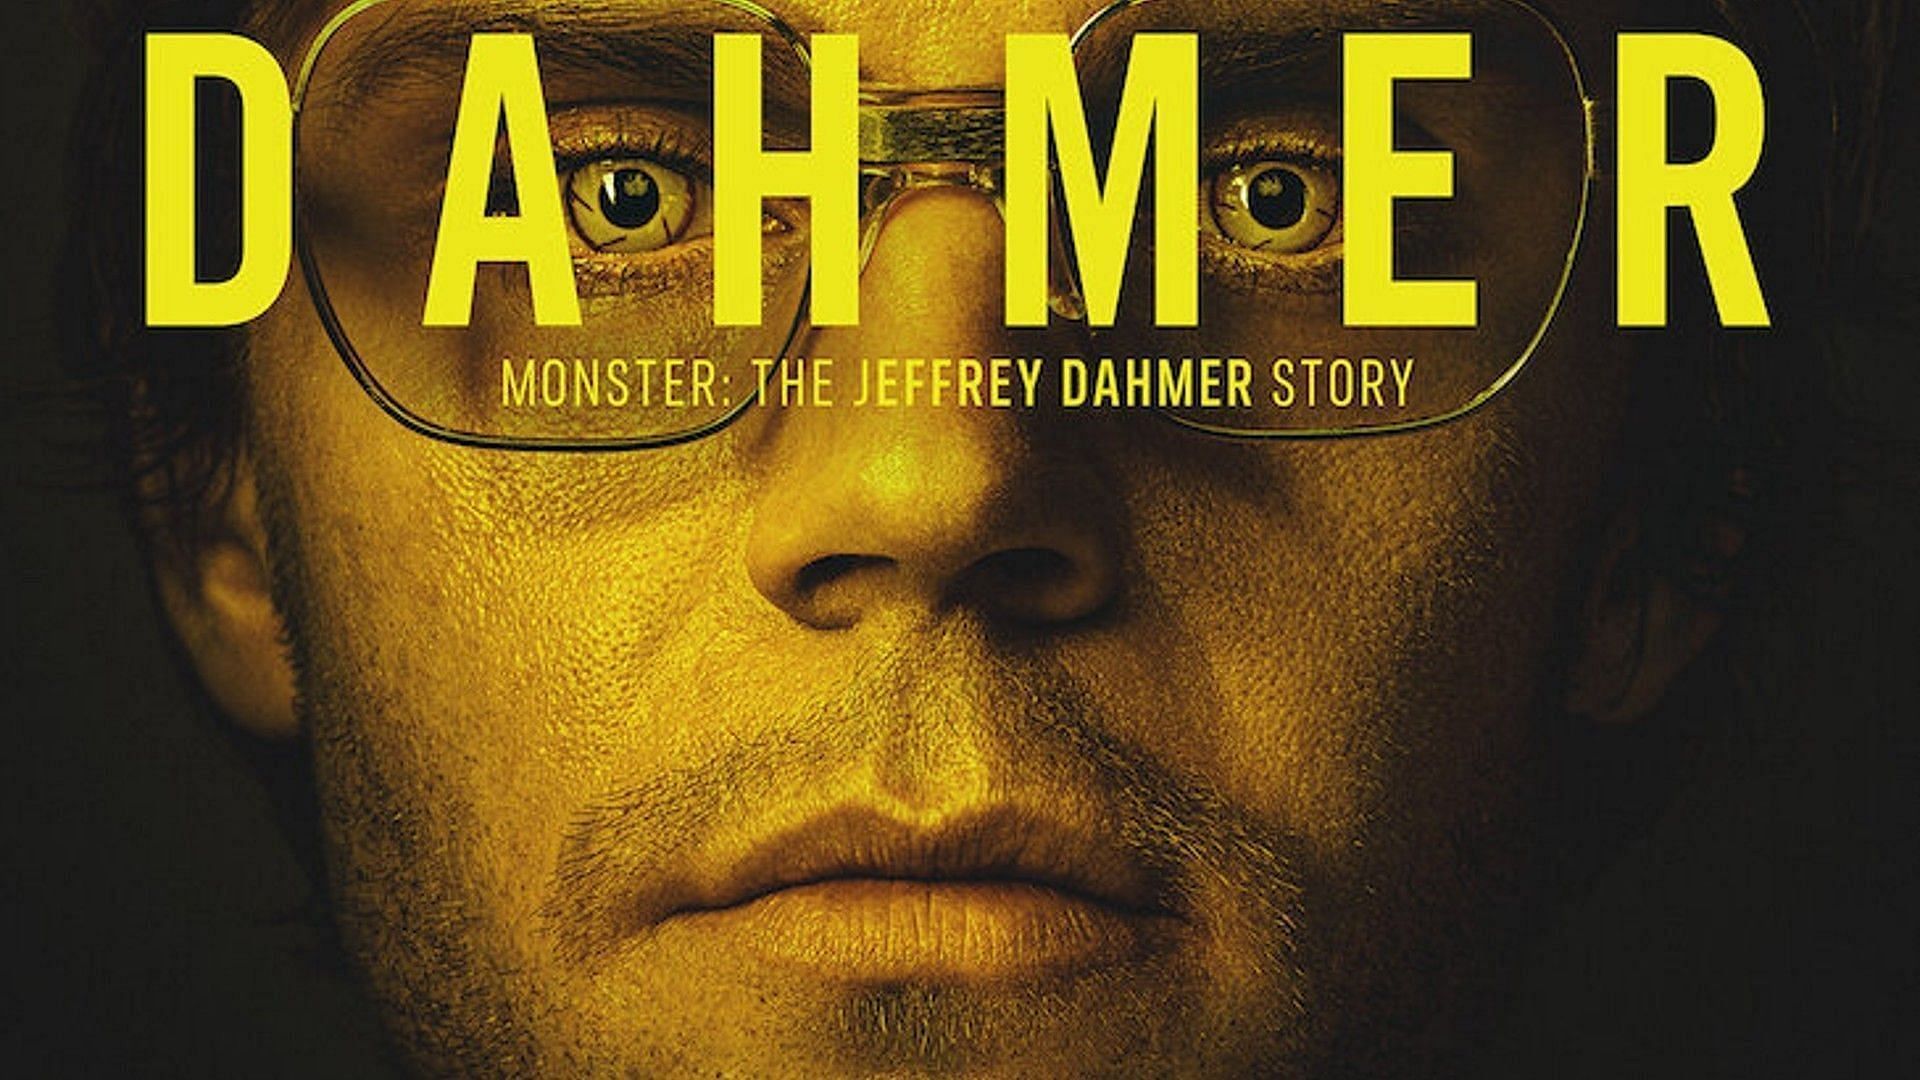 Dahmer &ndash; Monster: The Jeffrey Dahmer Story (Image via Netflix)